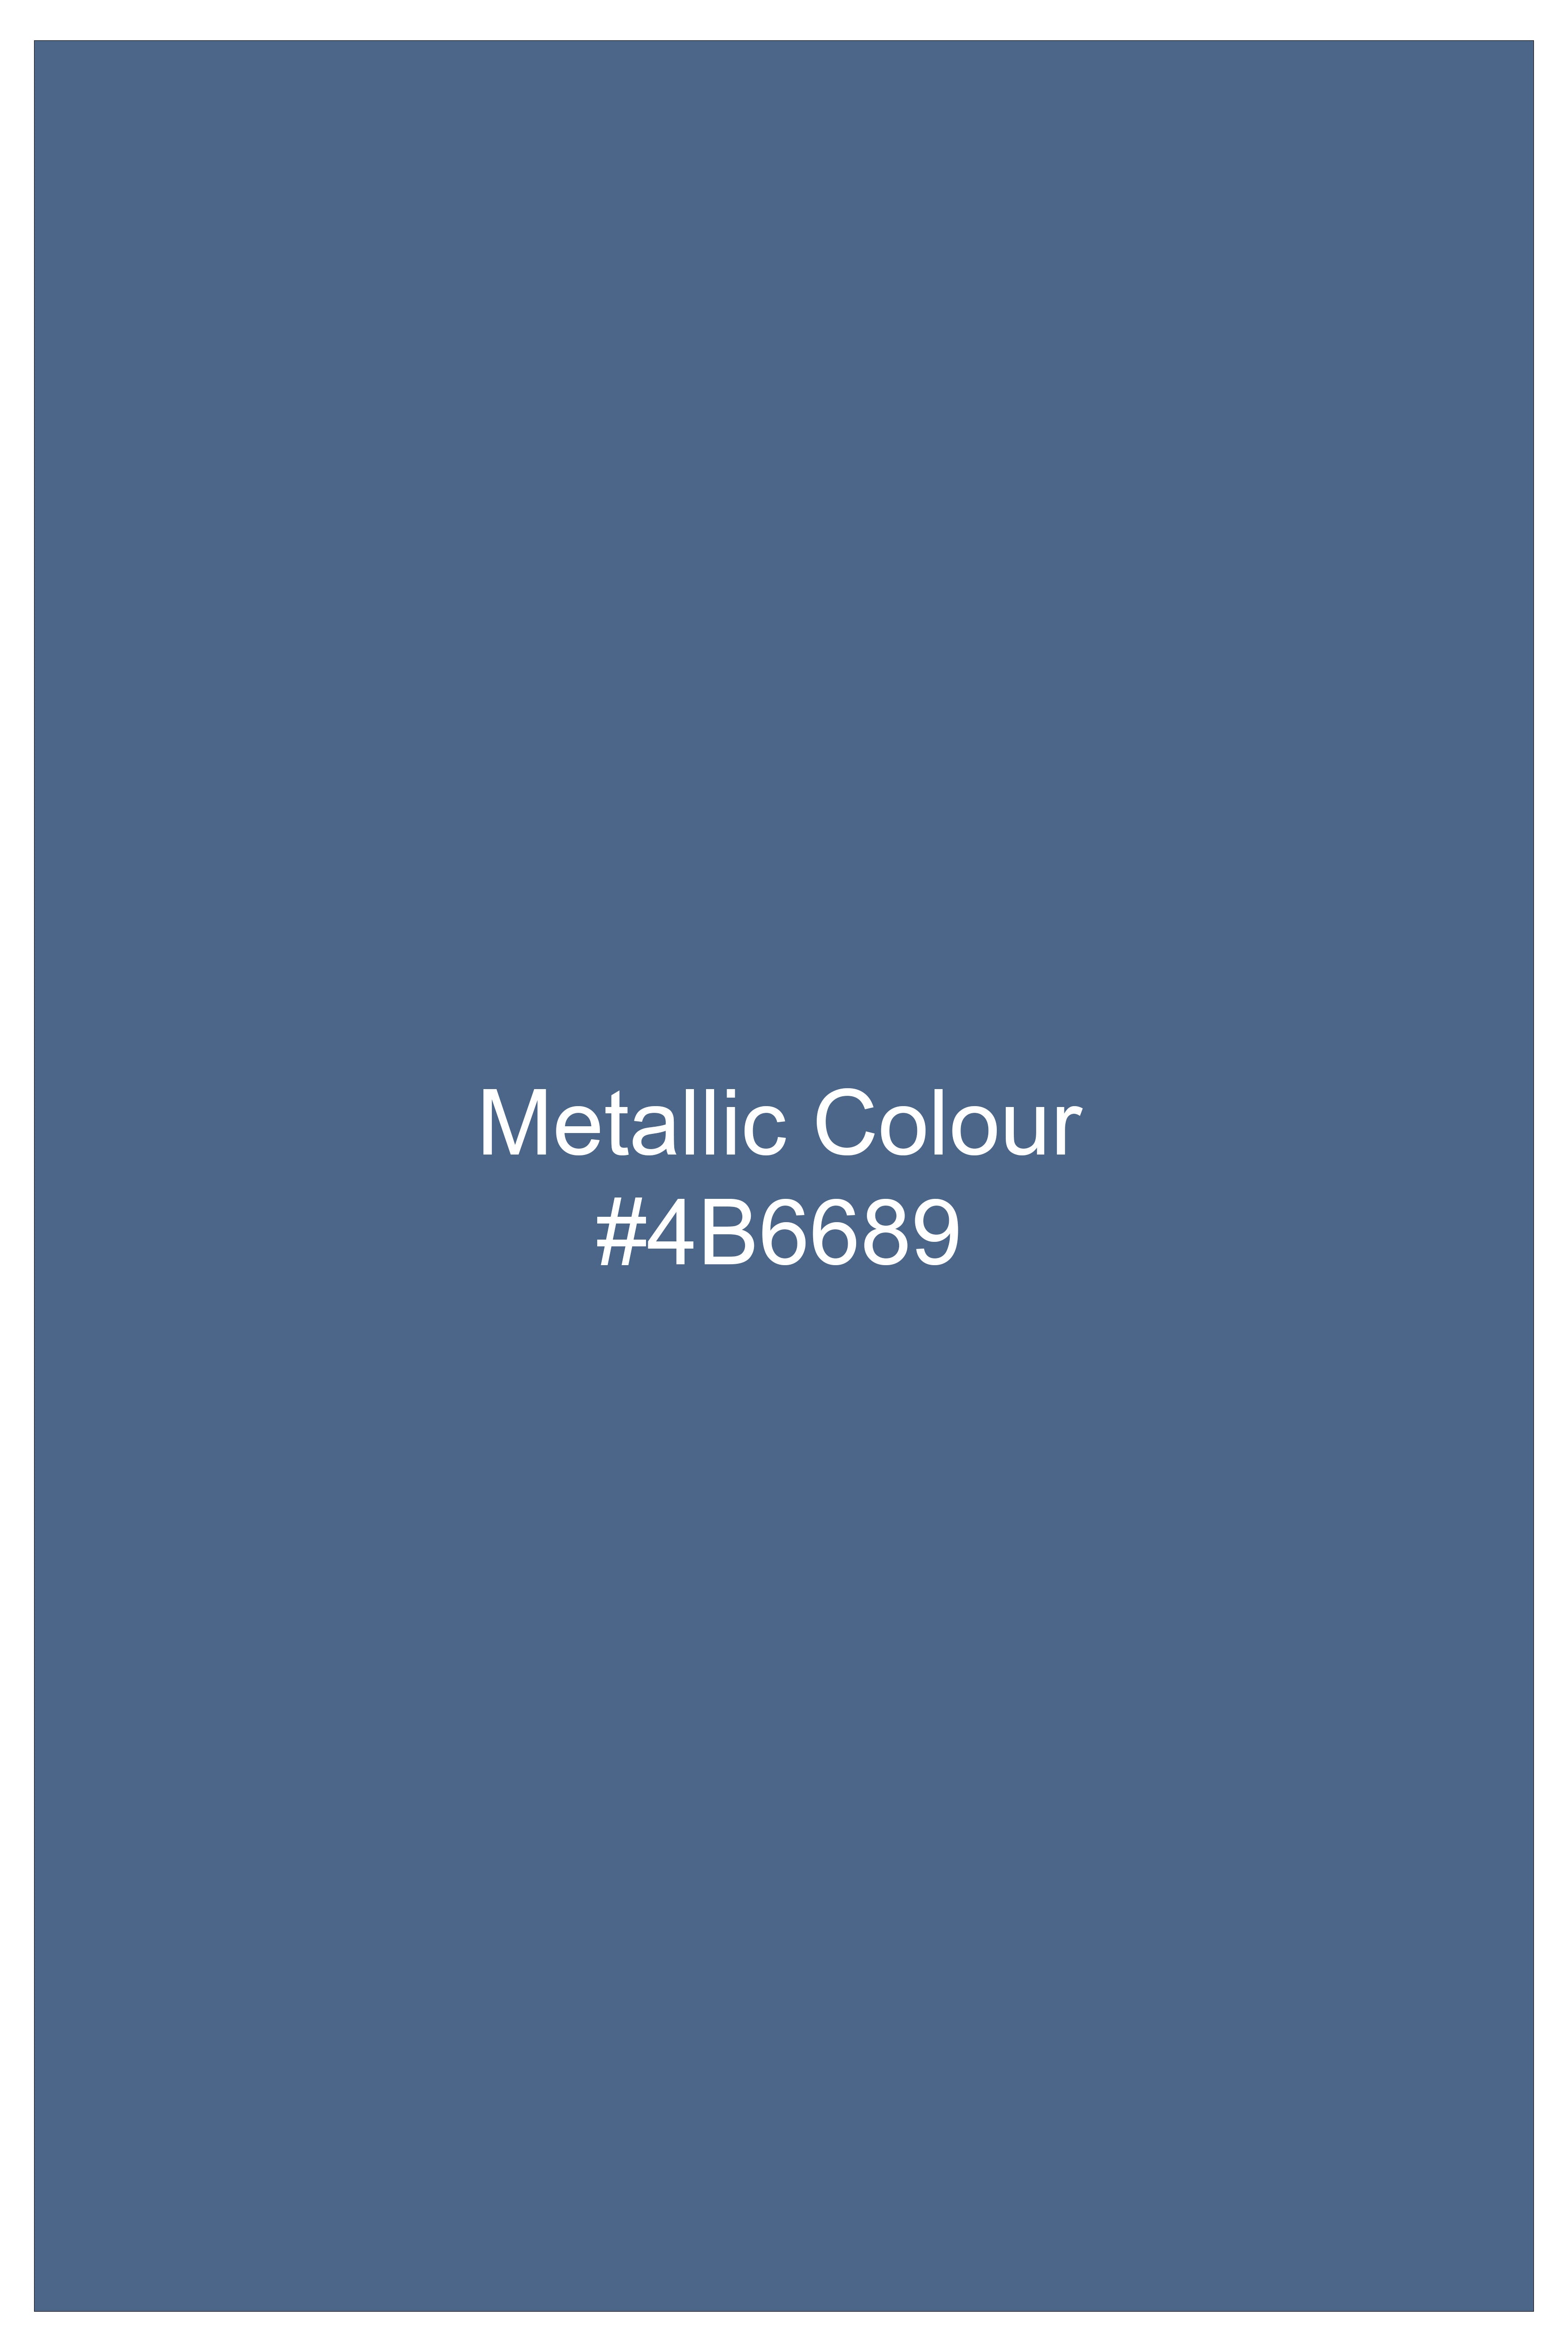 Metalic Blue Plaid Wool Blend Bandhgala Blazer